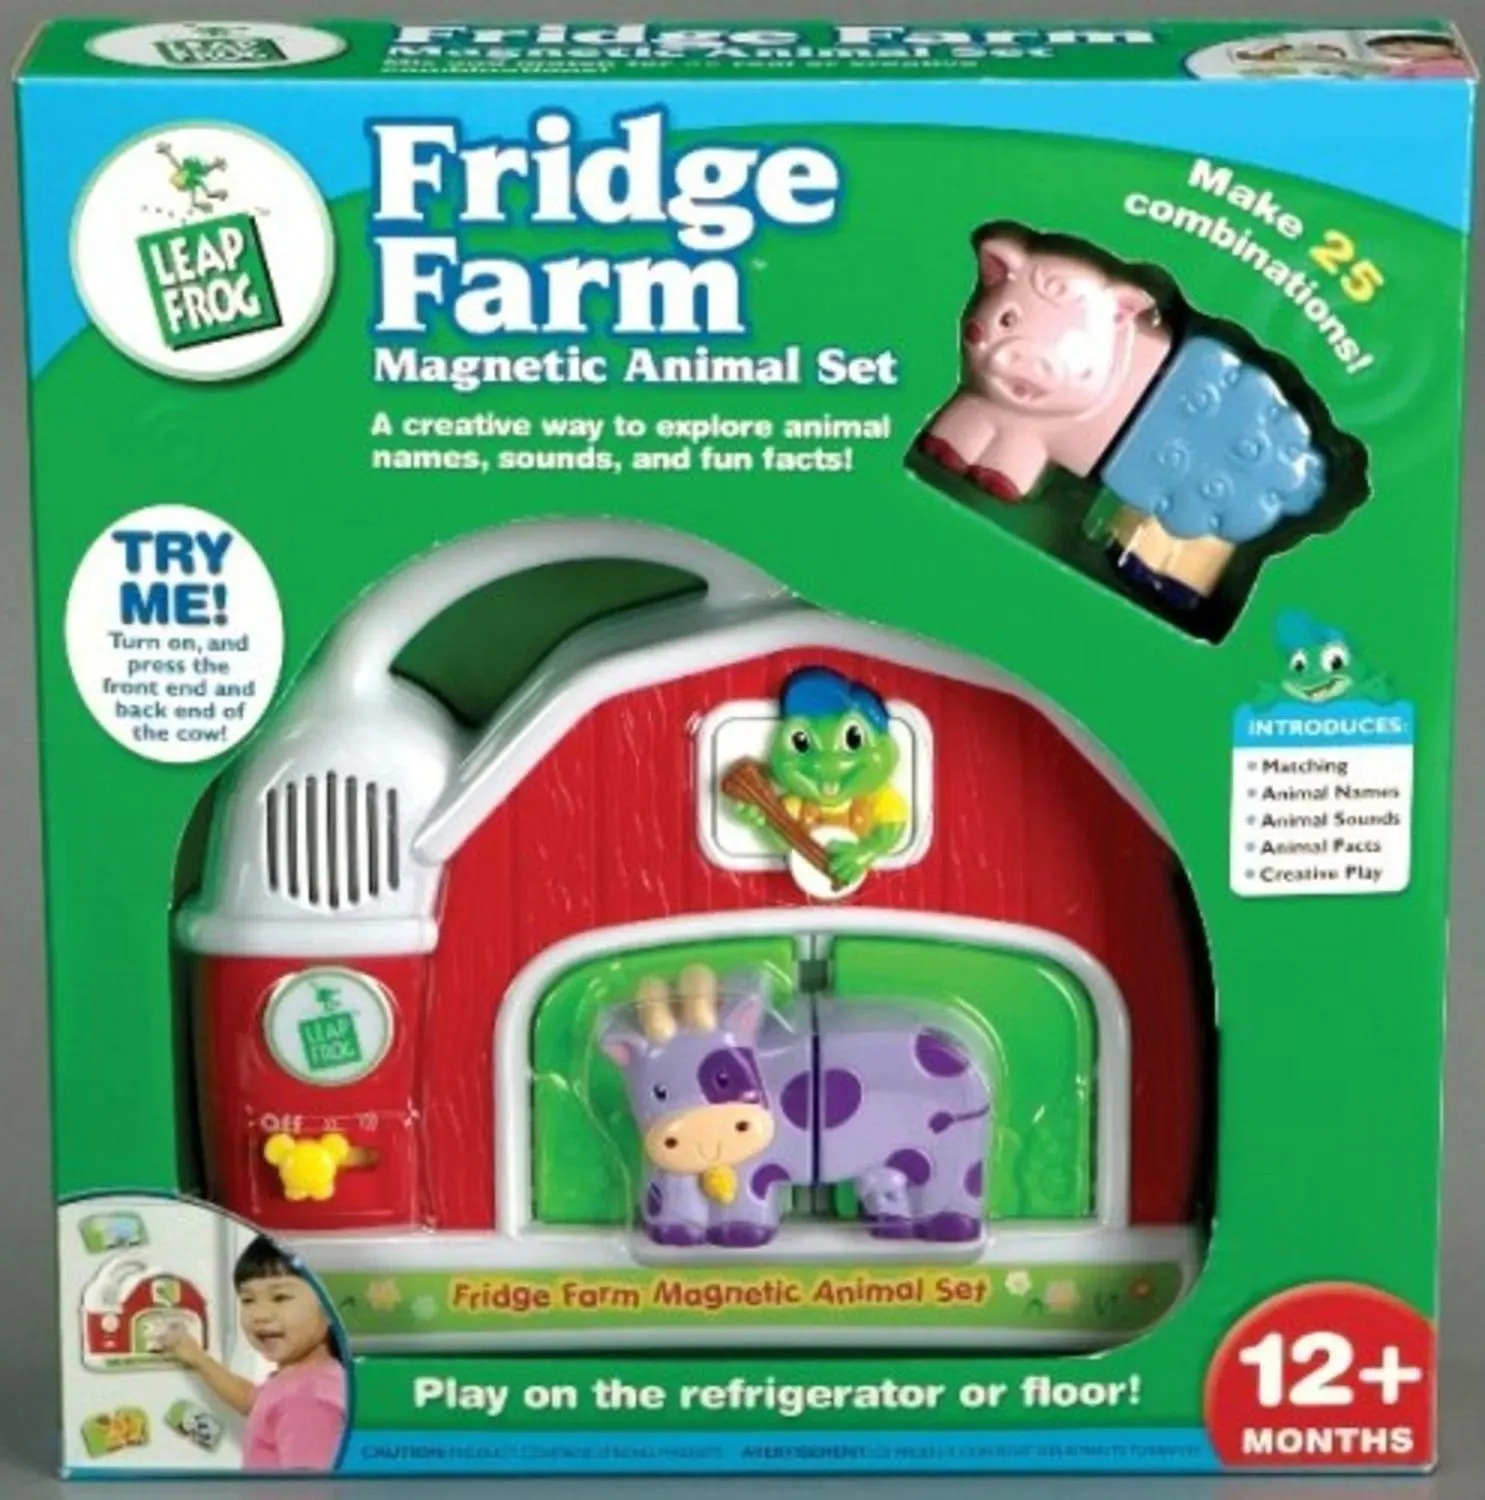 leapfrog refrigerator magnet toys